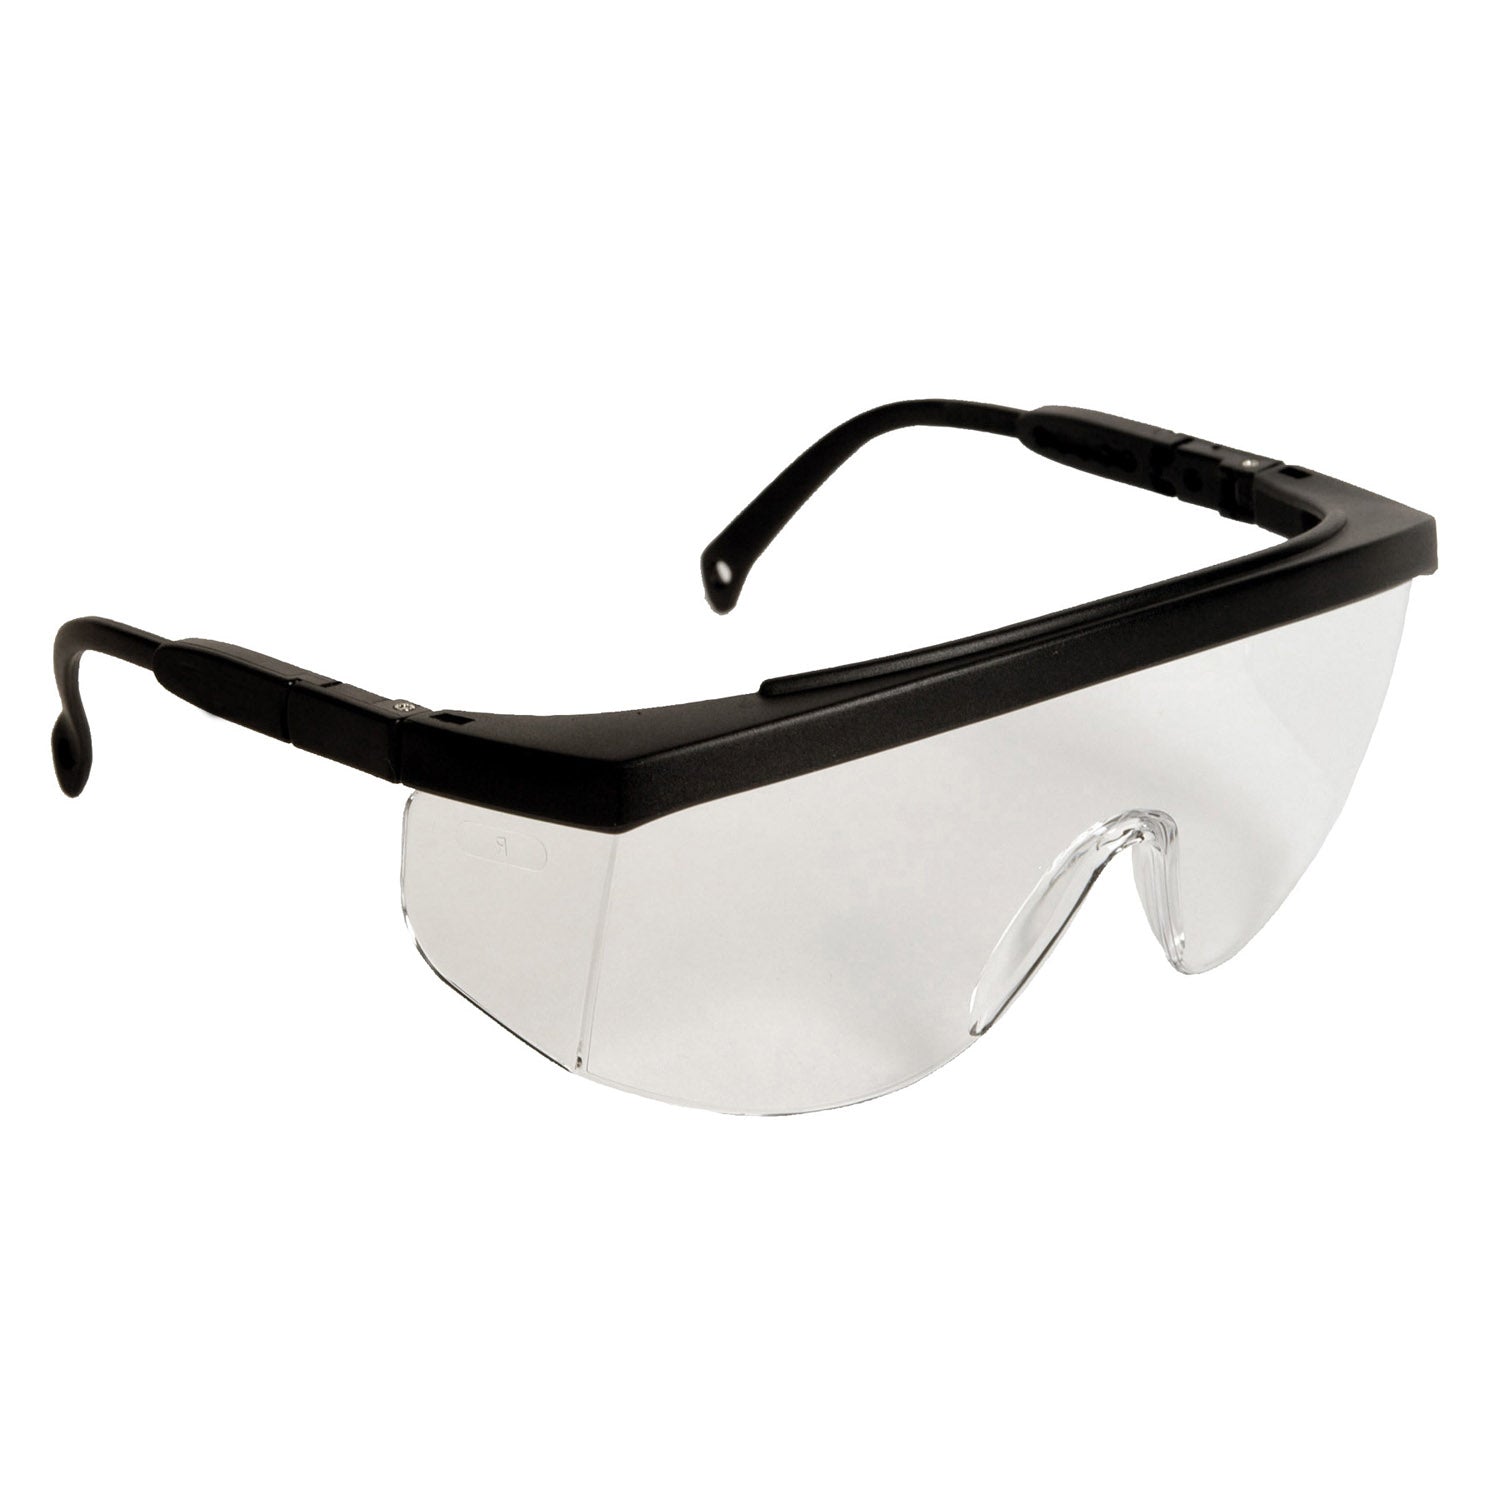 Gafas de seguridad para niños G4™ - Montura negra - Lente transparente